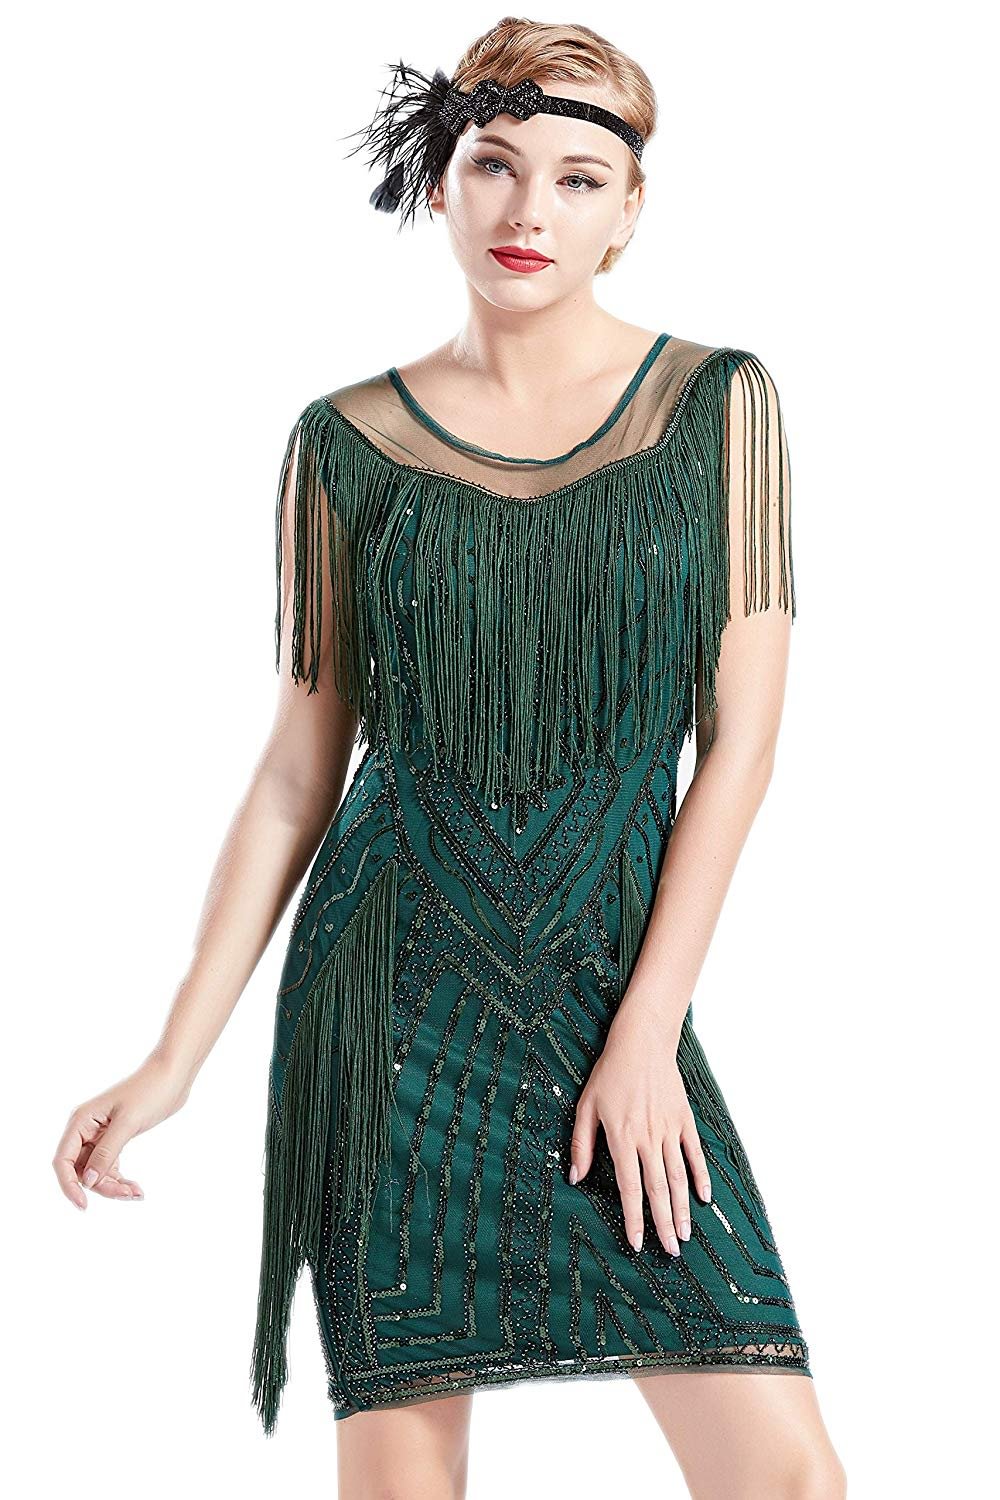 1920s Gatsby Dress Long Fringe Flapper Dress Roaring 20s Sequins Beaded Dress Vintage Art Deco Dress